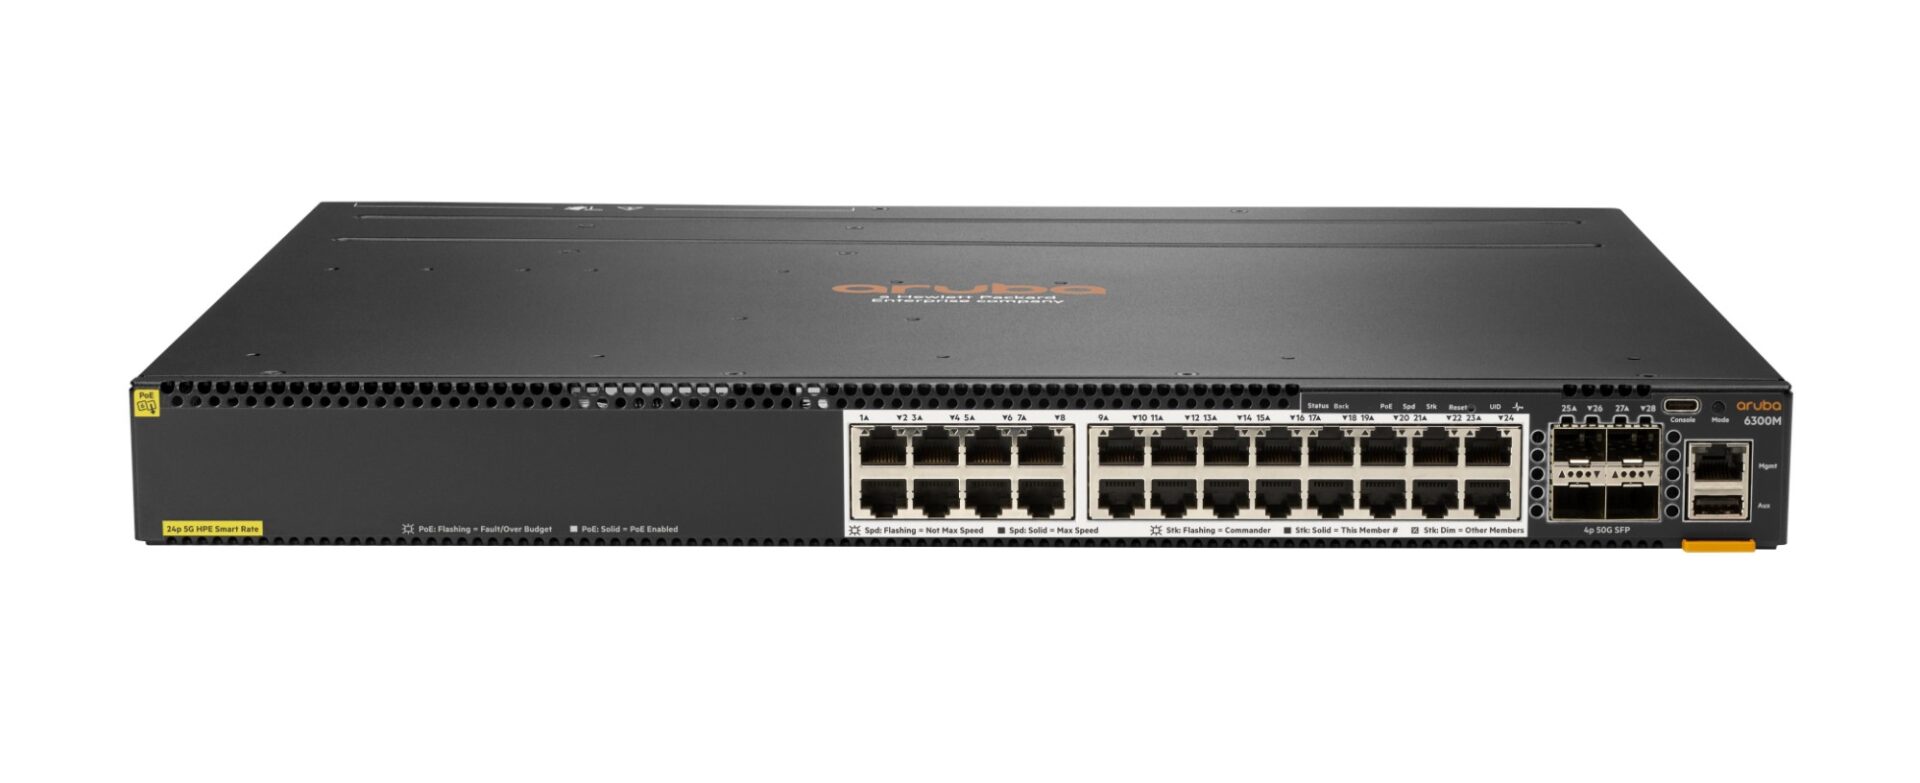 Aruba 6300M Managed L3 Power over Ethernet (PoE) 1U Grey